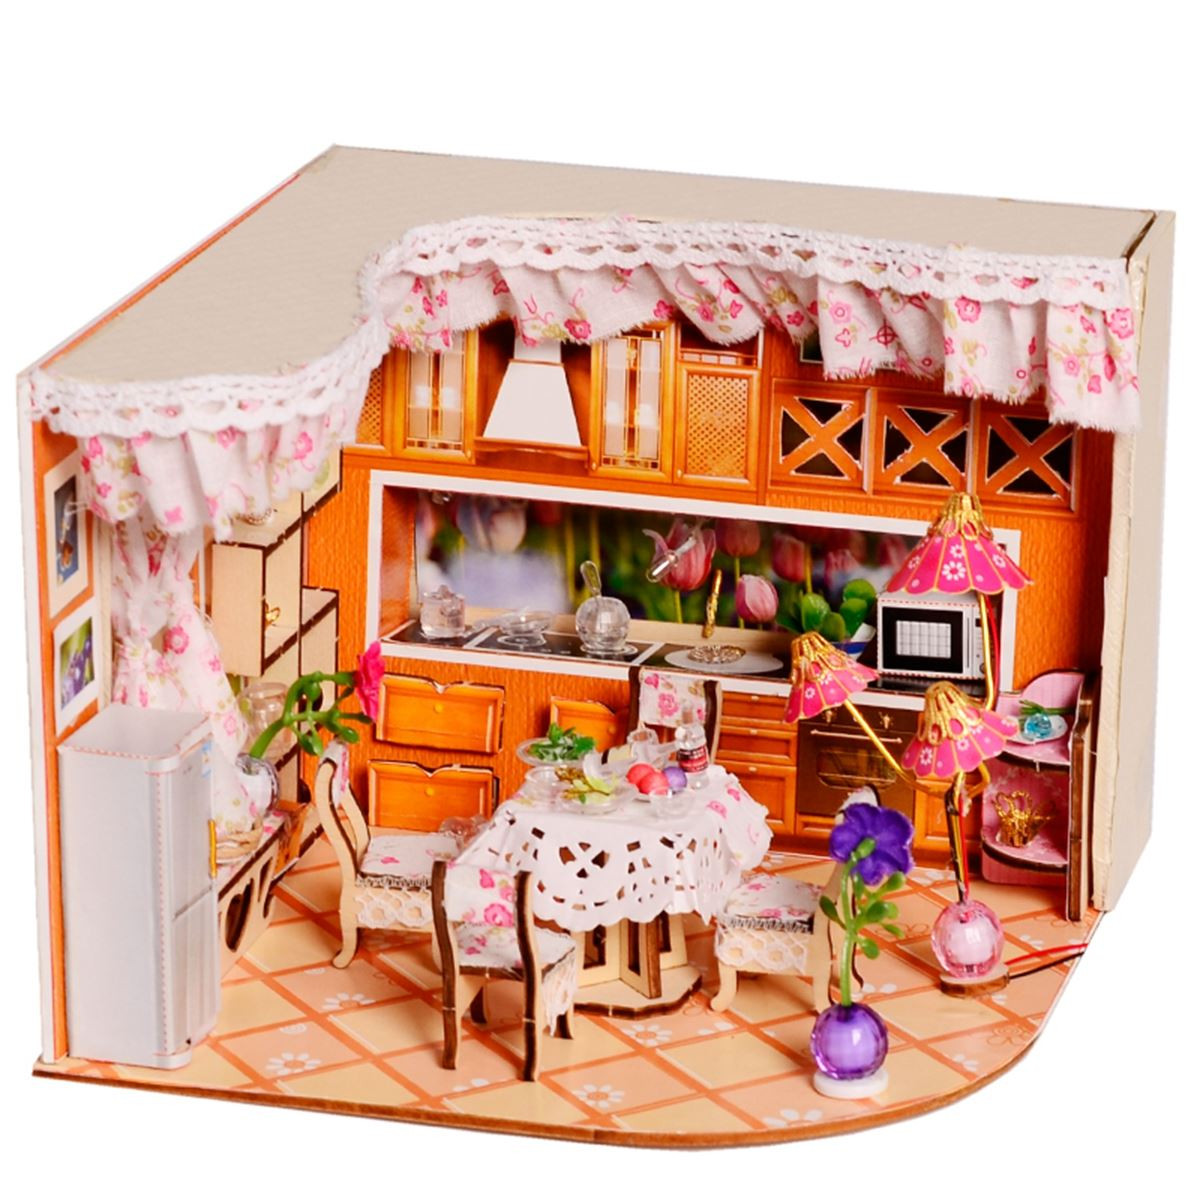 DIY Doll House Kits
 Lovely Merry Sweet Home Habitat Room DIY Dollhouse Kit